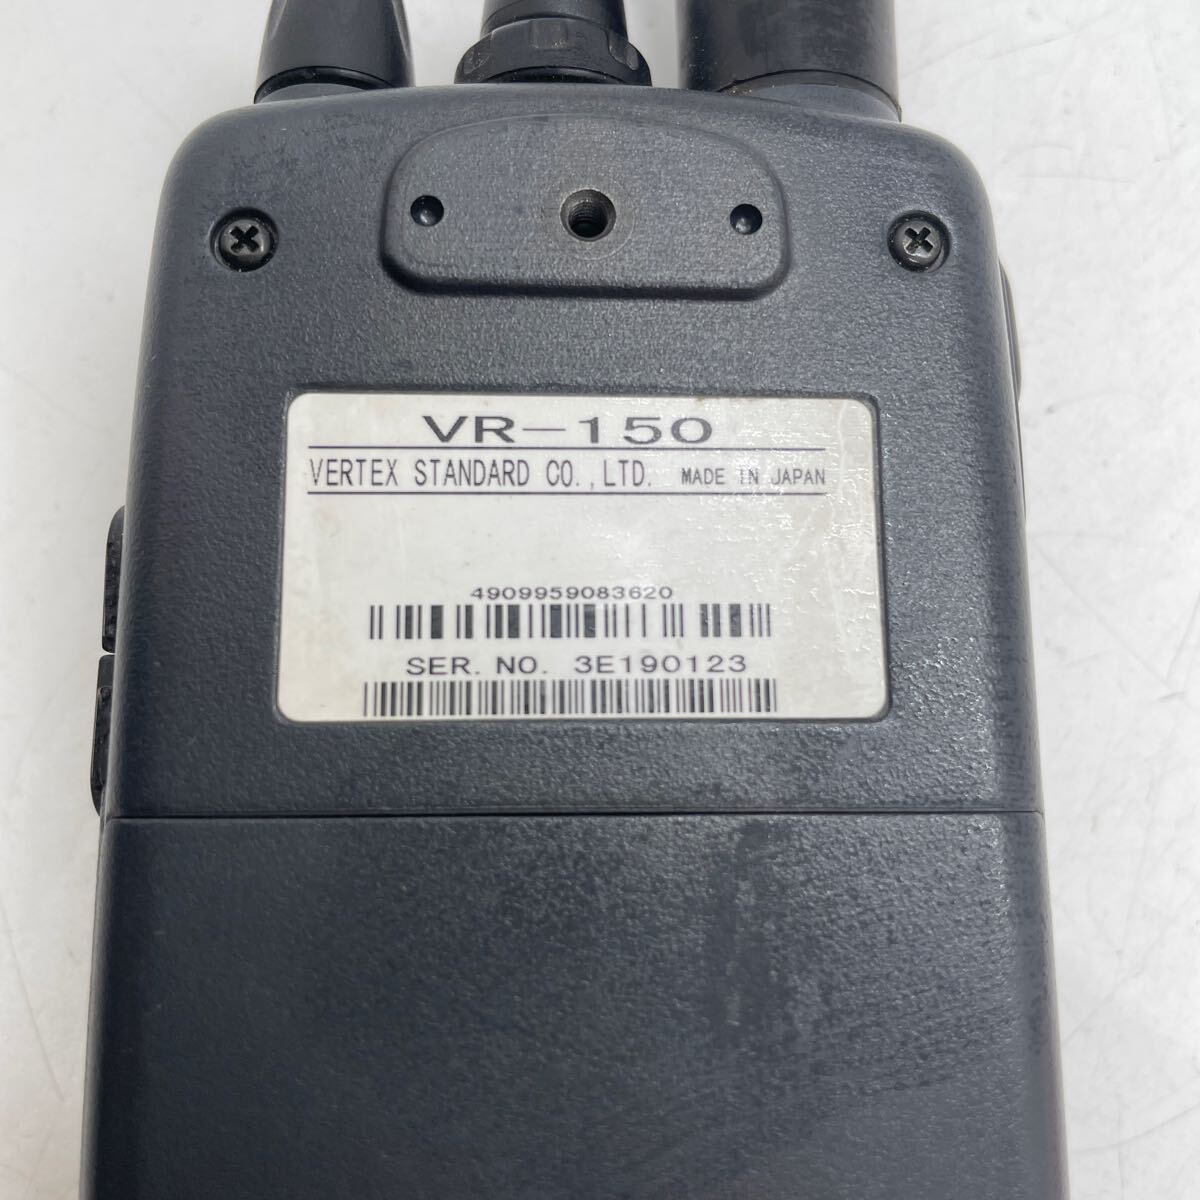 z.A#113 transceiver VERTEX STANDARD CO.,LTD. VR-150 MADE IN JAPAN 3E190123 standard wide-band receiver bar Tec s